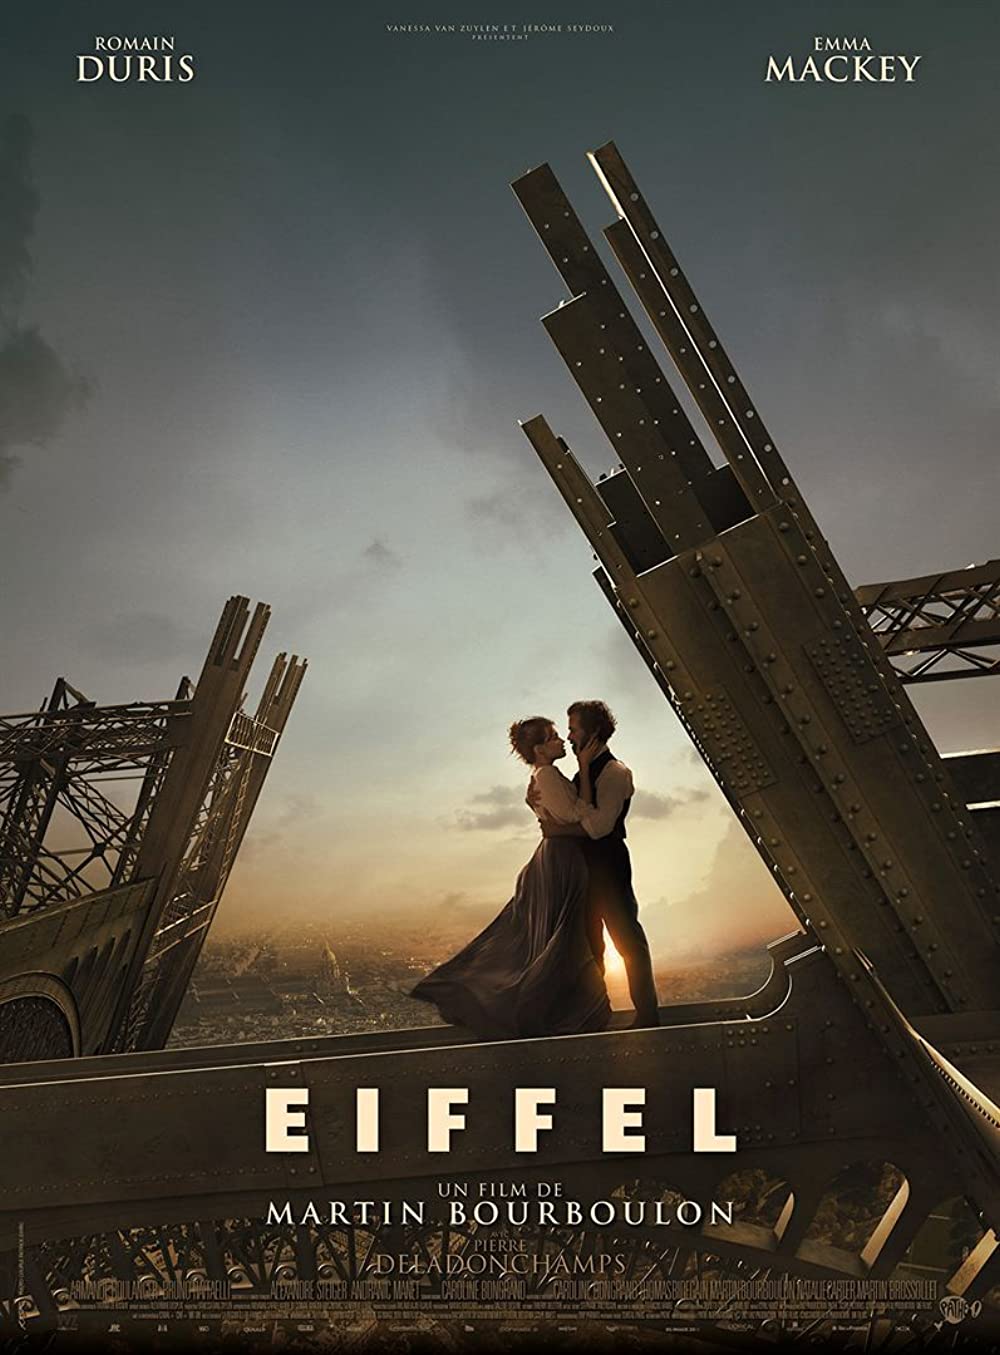 Stiahni si Filmy CZ/SK dabing  Eiffel (2021)(CZ)[1080p] = CSFD 62%